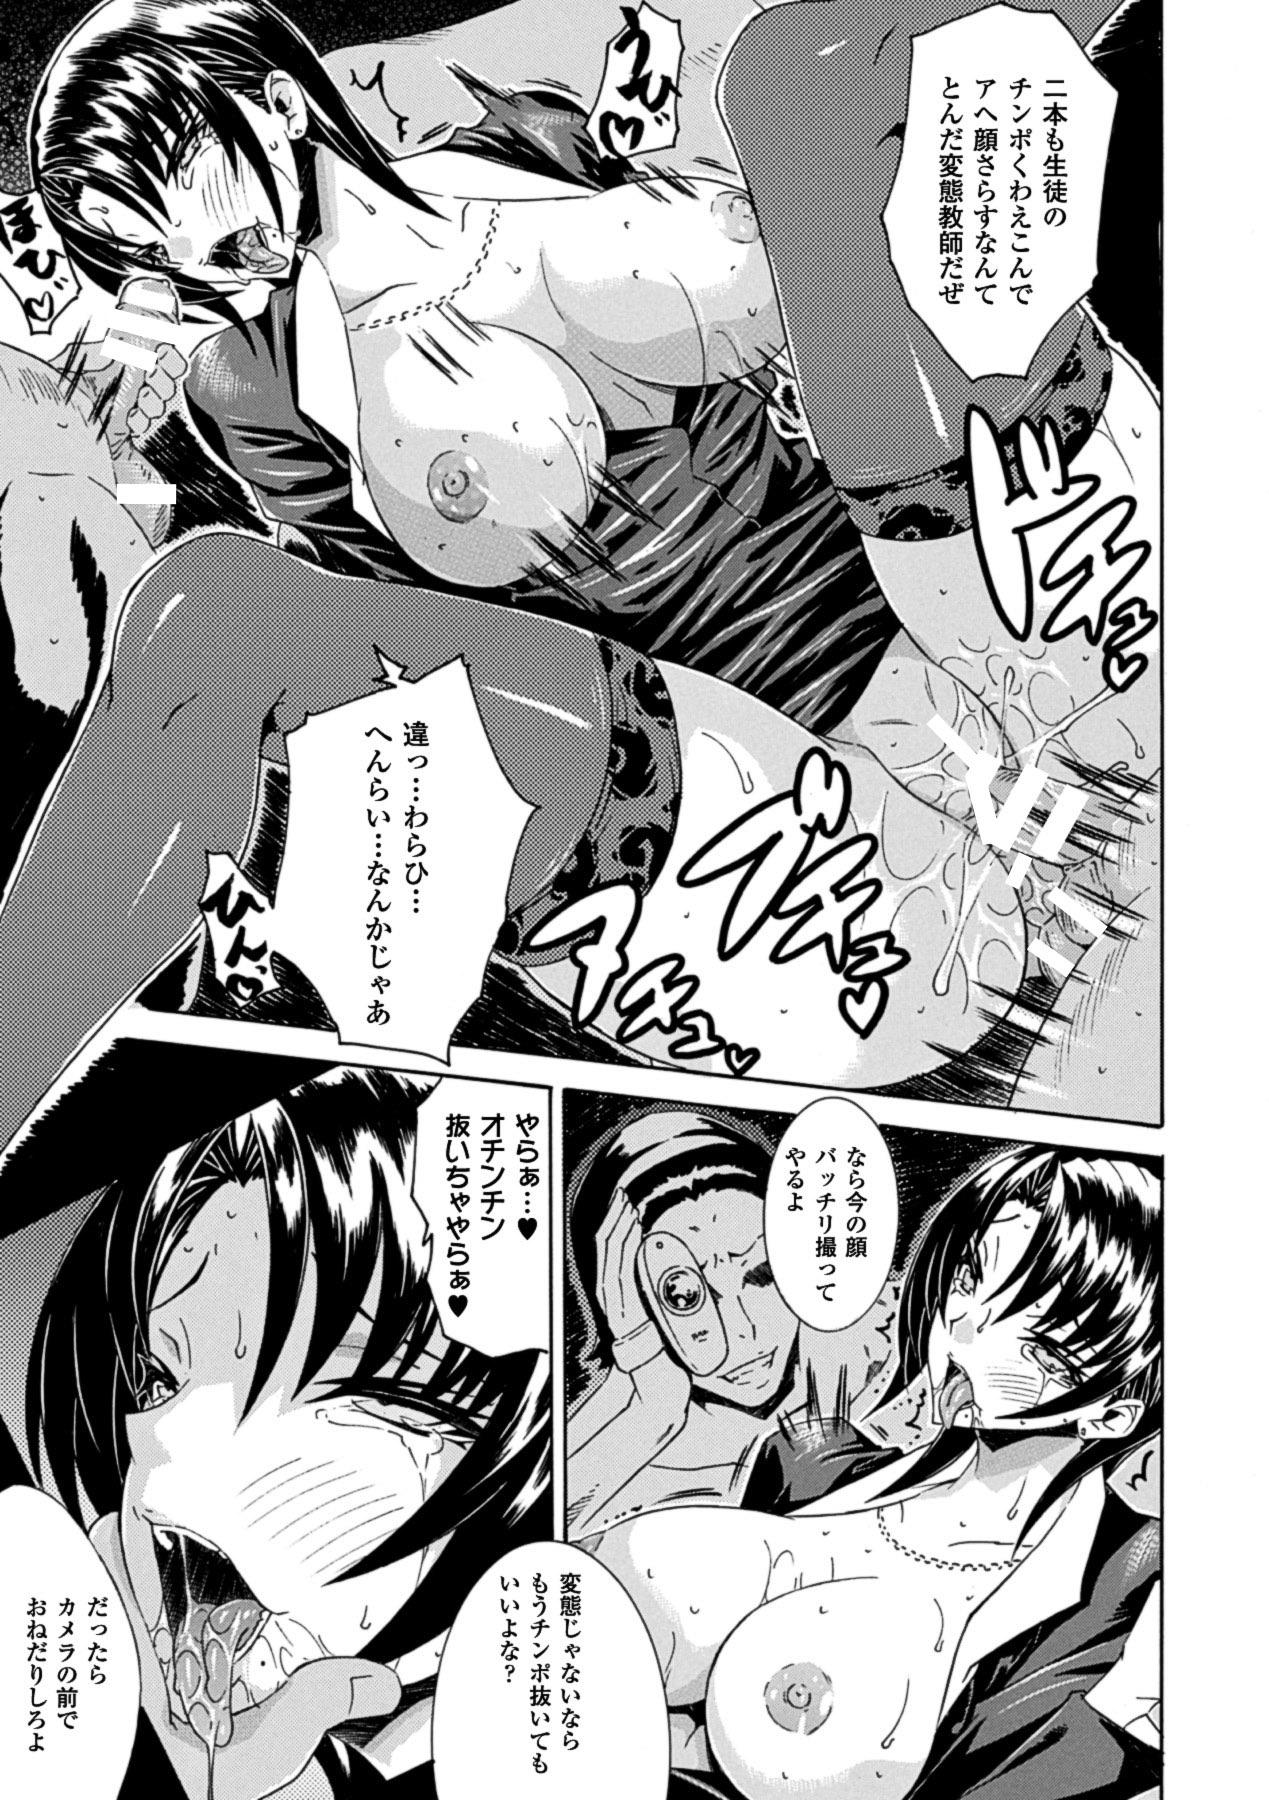 Kachiki na Onna ga Buzama na Ahegao o Sarasu made - Until Unyielding Women Exposes An Awkward Expression 78